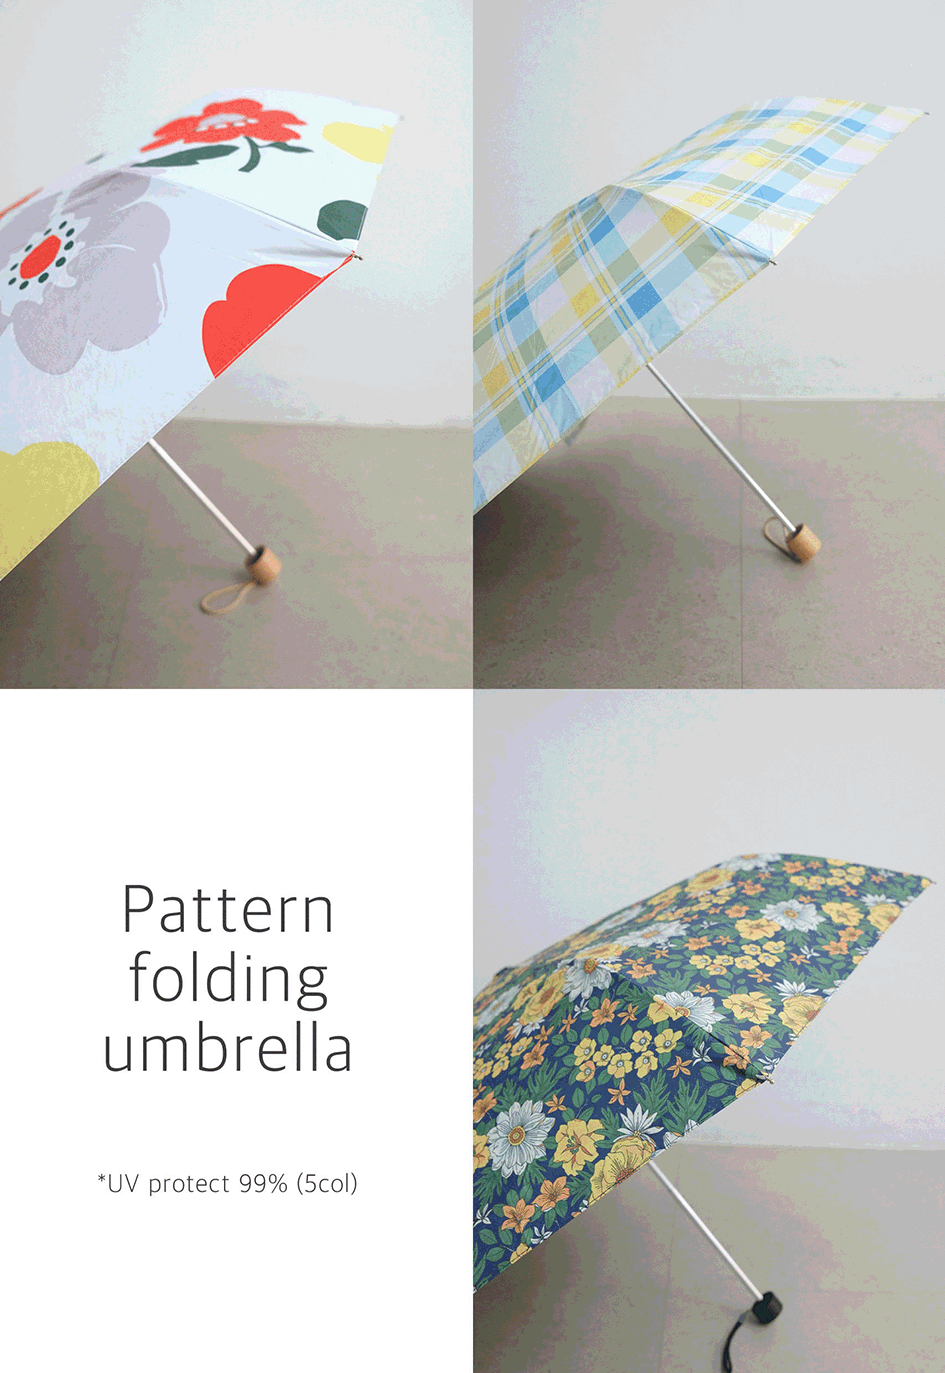 Pattern folding umbrella (5col) *UV protect